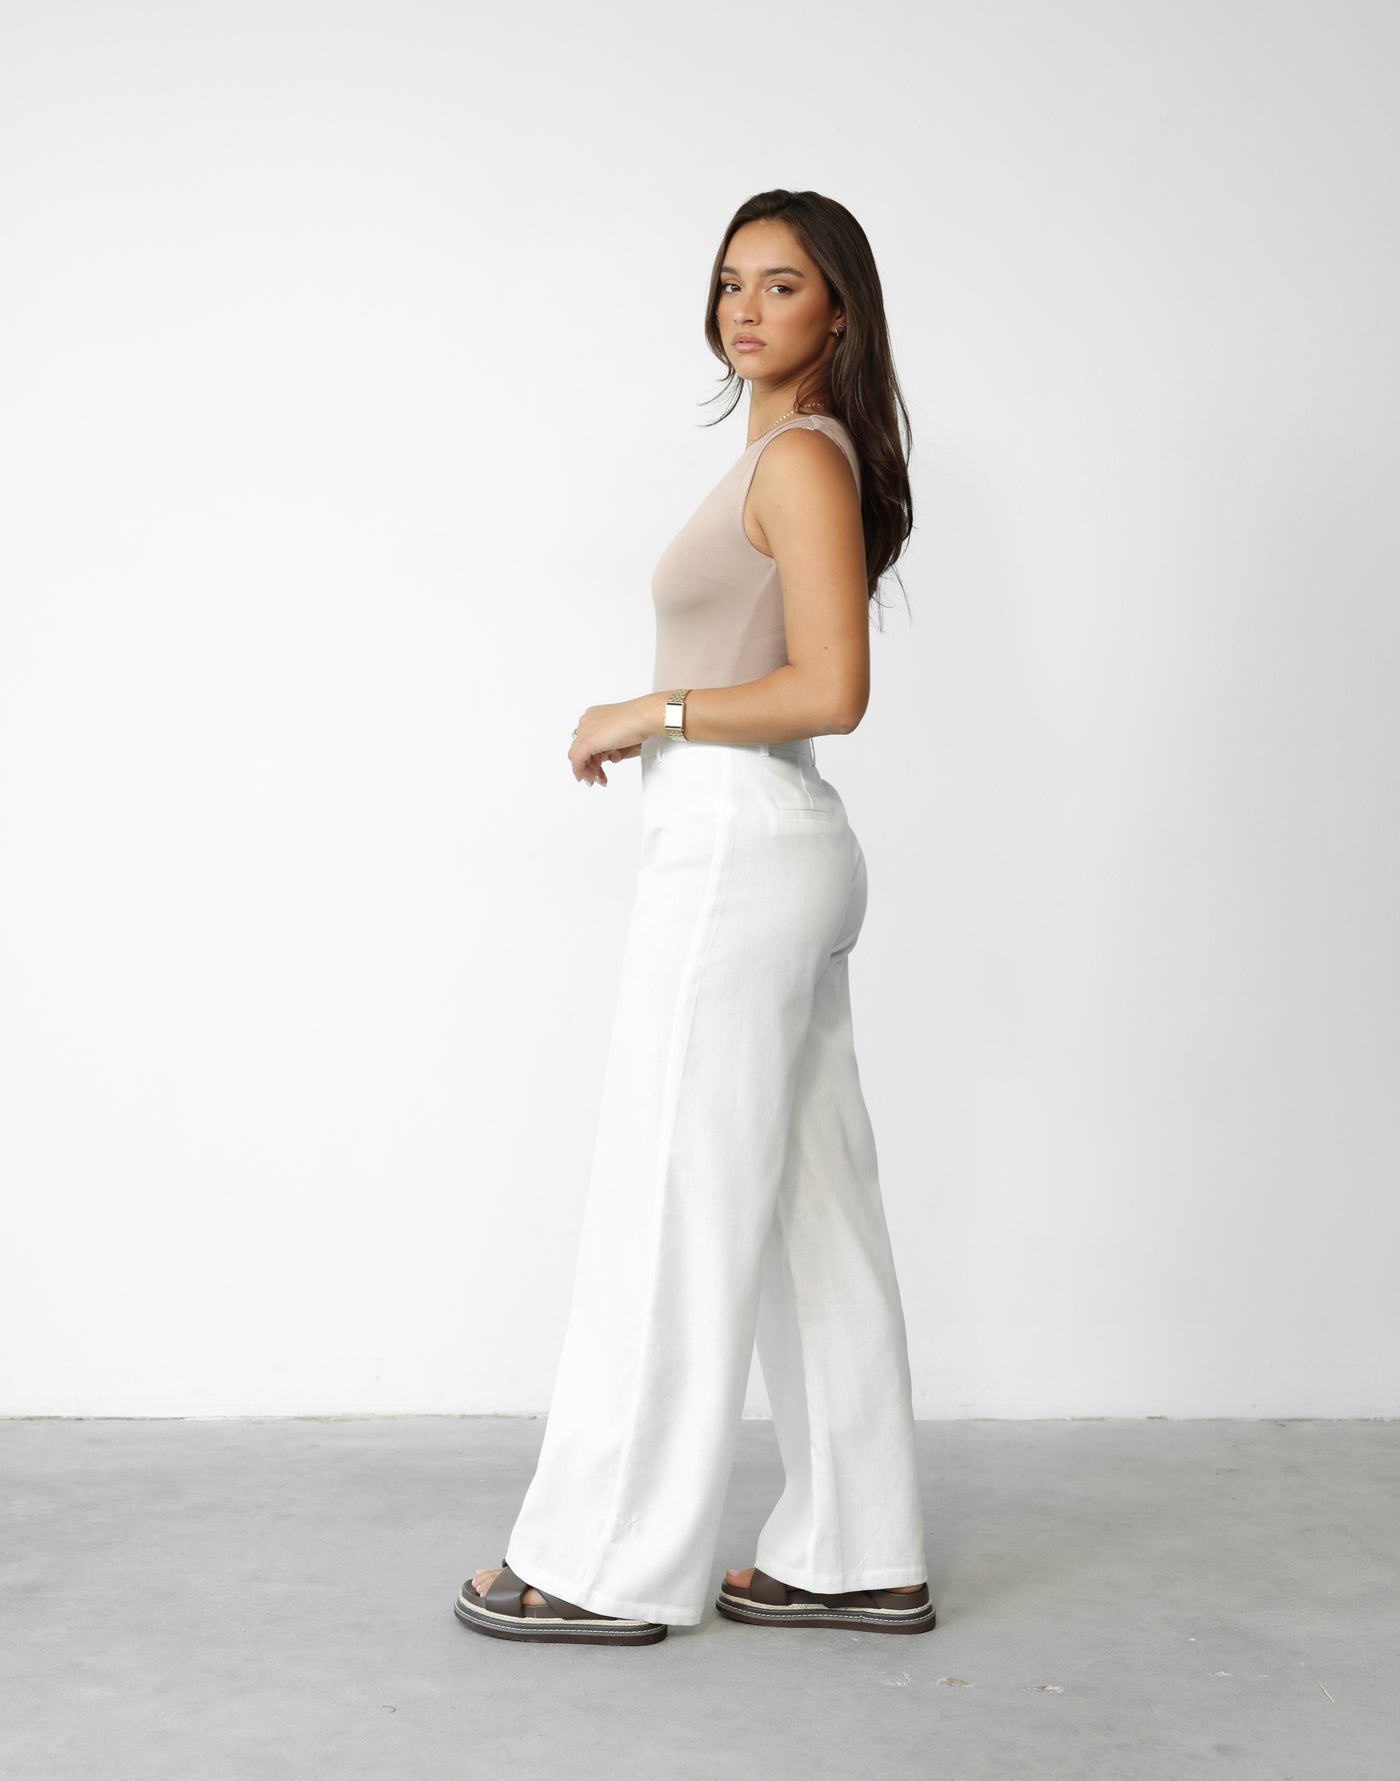 Arin Bodysuit (Beige) - Beige Asymmetrical Twisted Short Sleeved Bodysuit - Women's Top - Charcoal Clothing